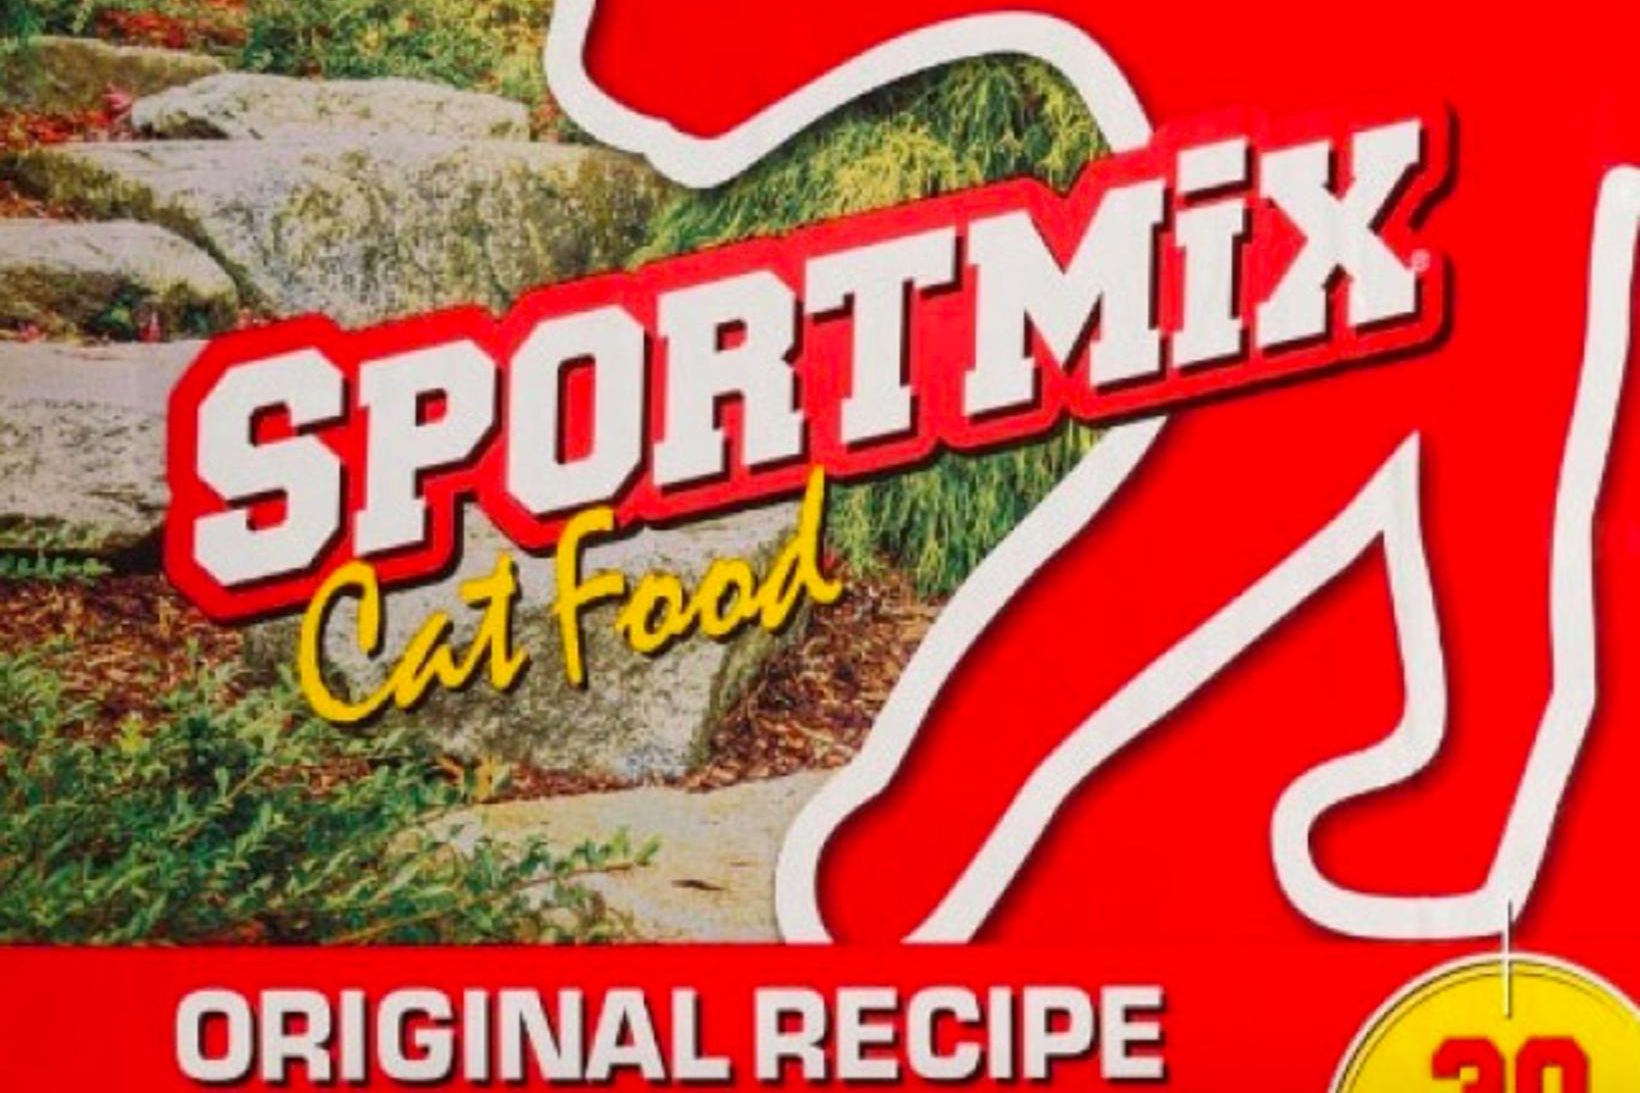 Sportmix original cat food.